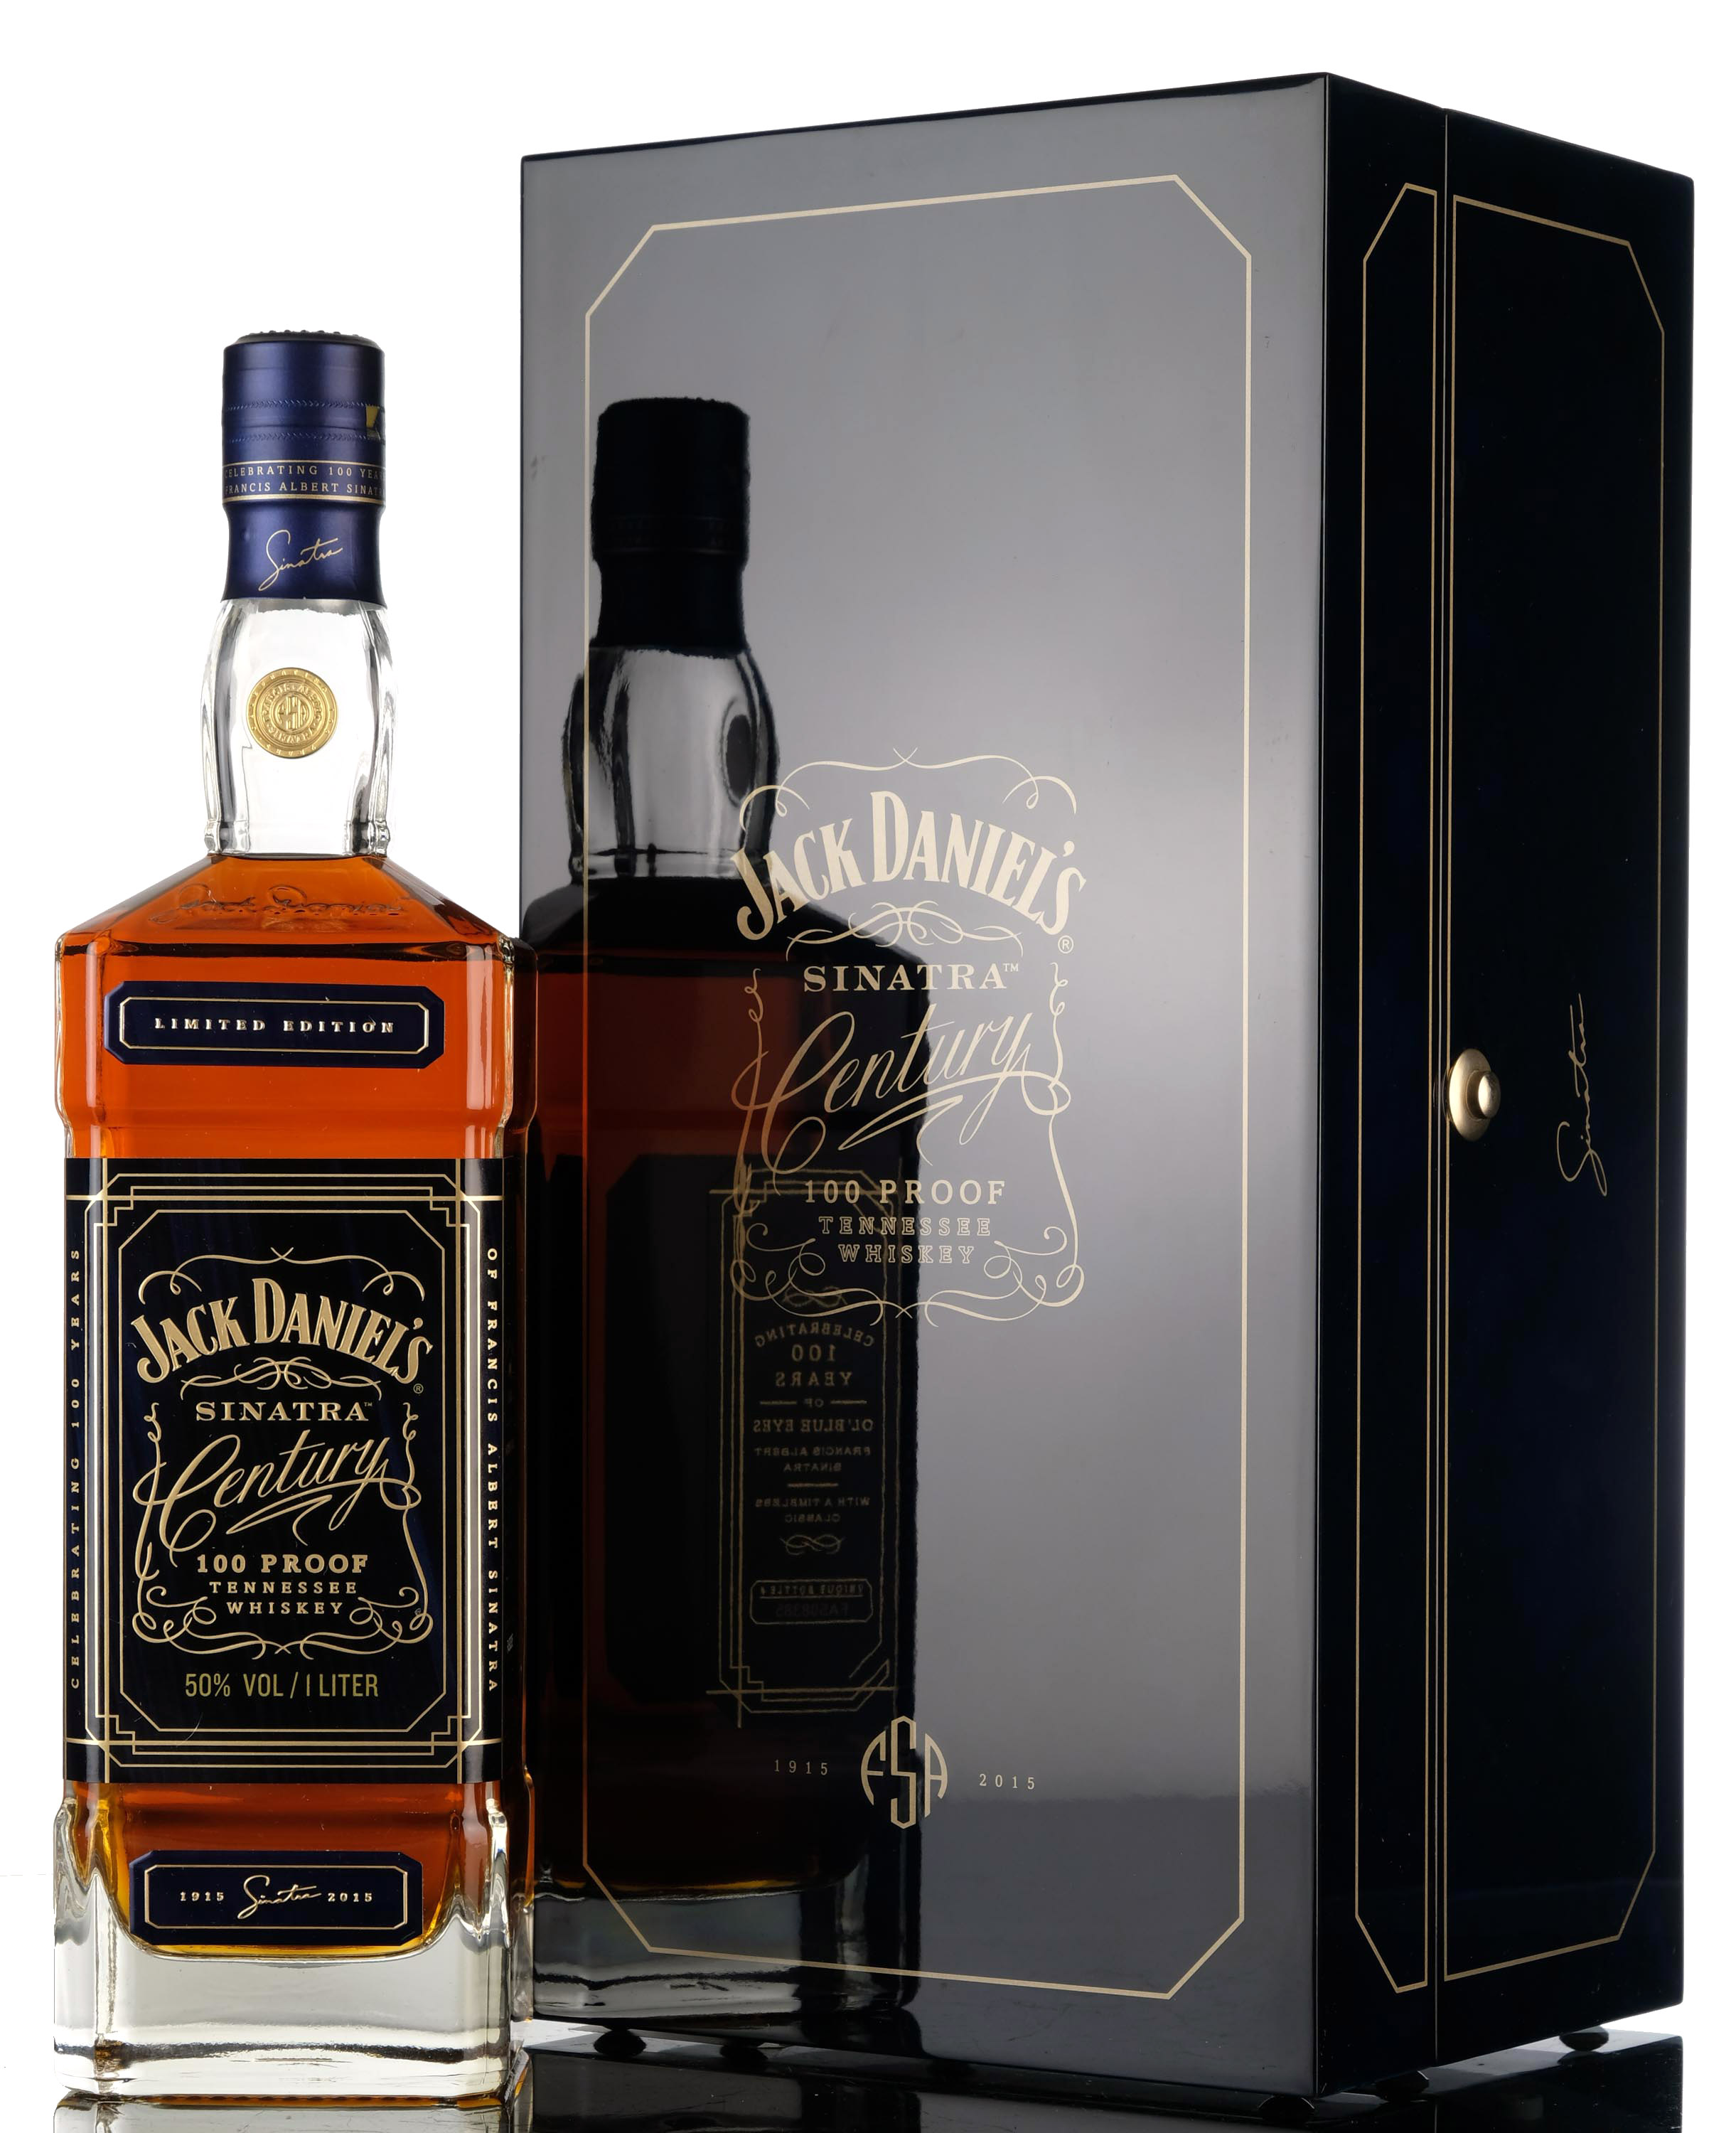 Jack Daniels Sinatra Century - Limited Edition - 2015 Release - 1 Litre